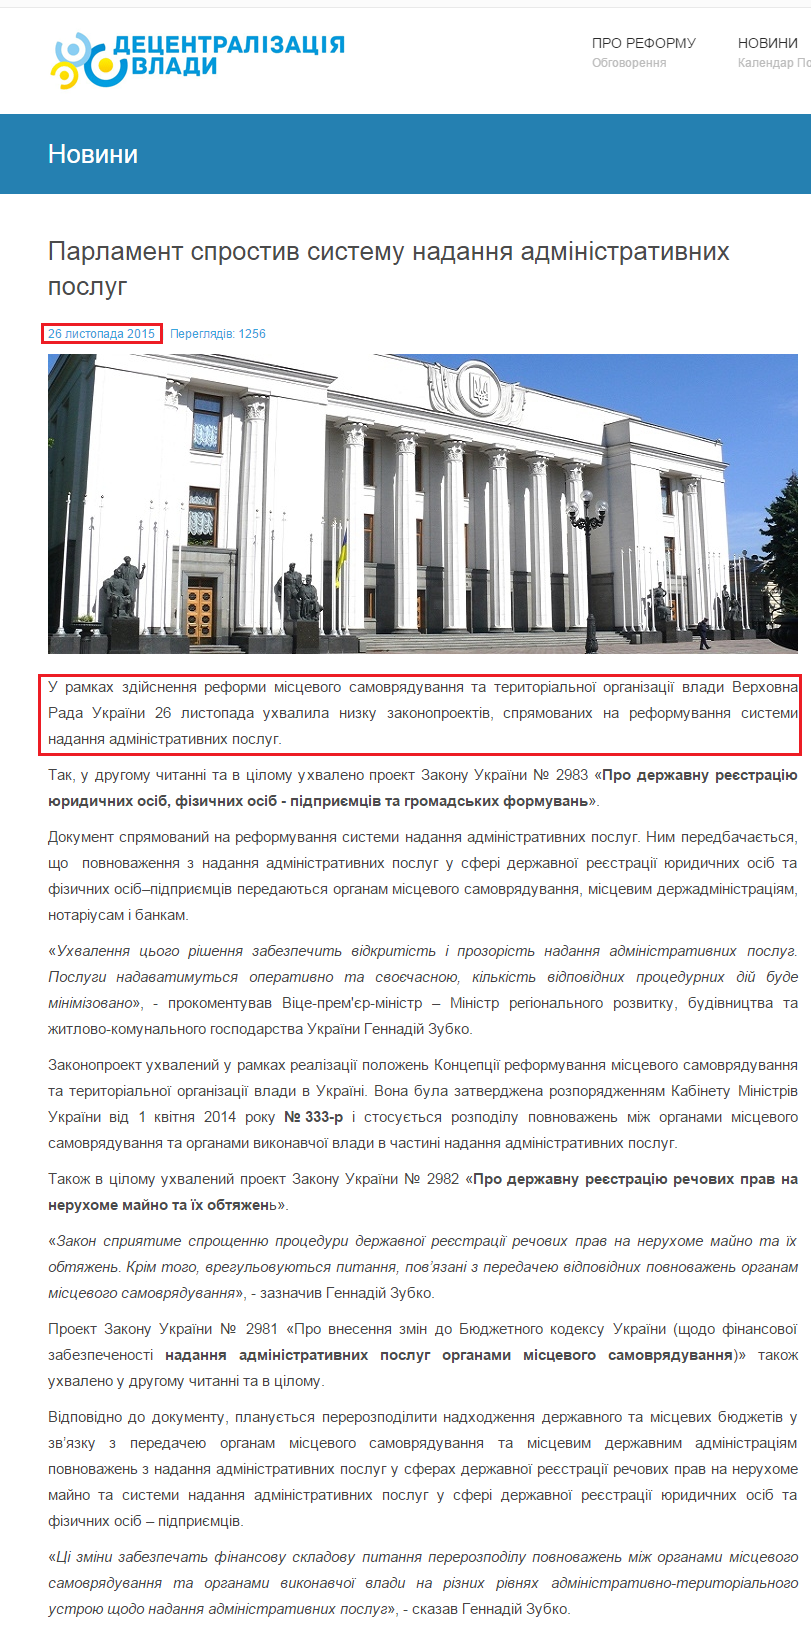 http://decentralization.gov.ua/news/item/id/947